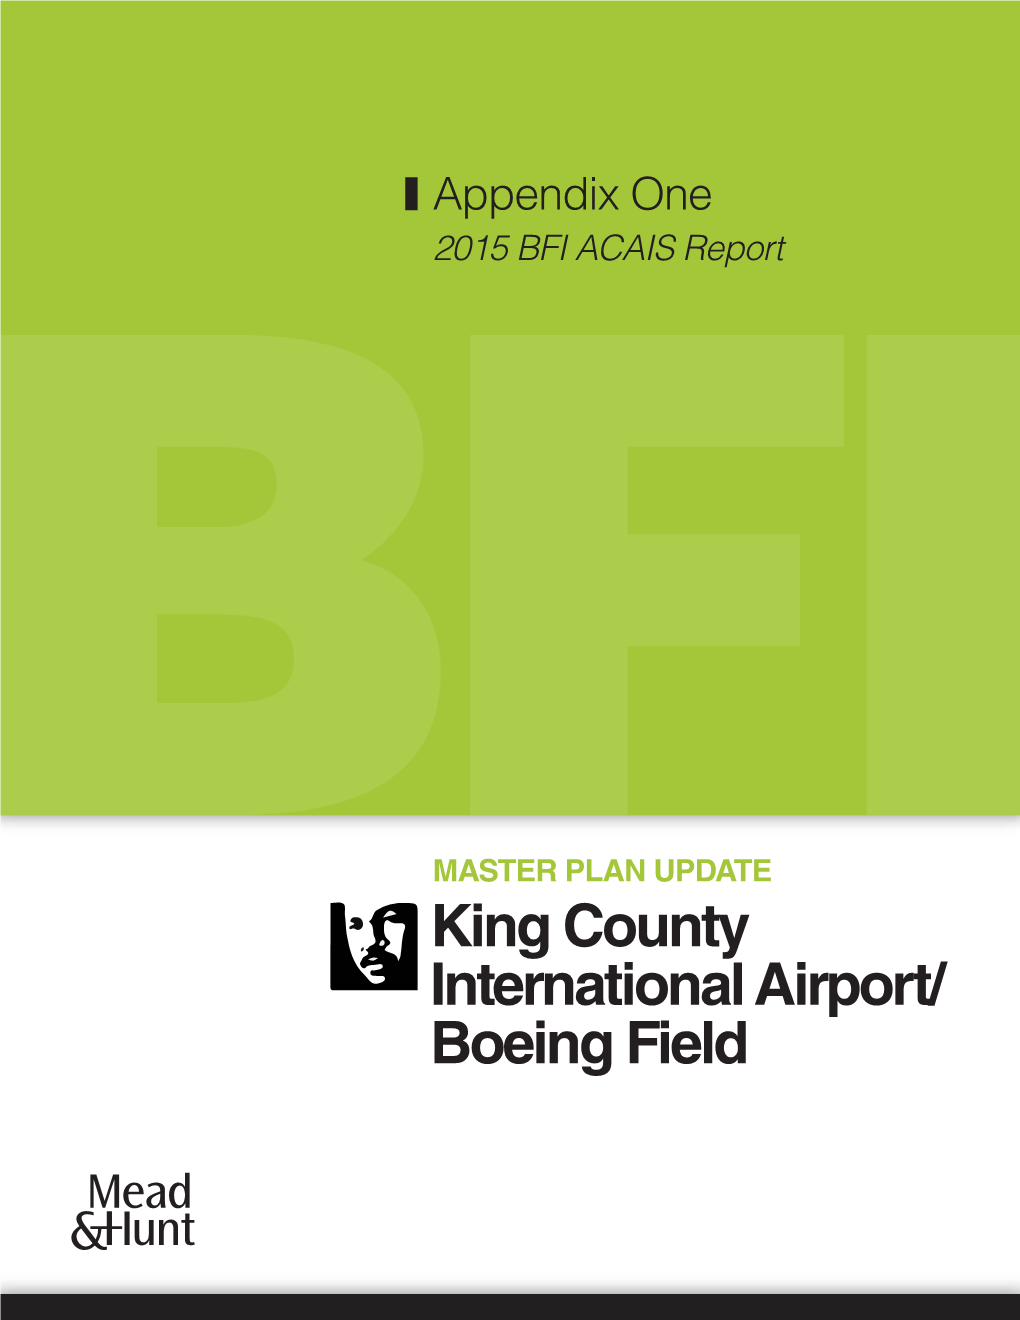 King County International Airport/ Boeing Field